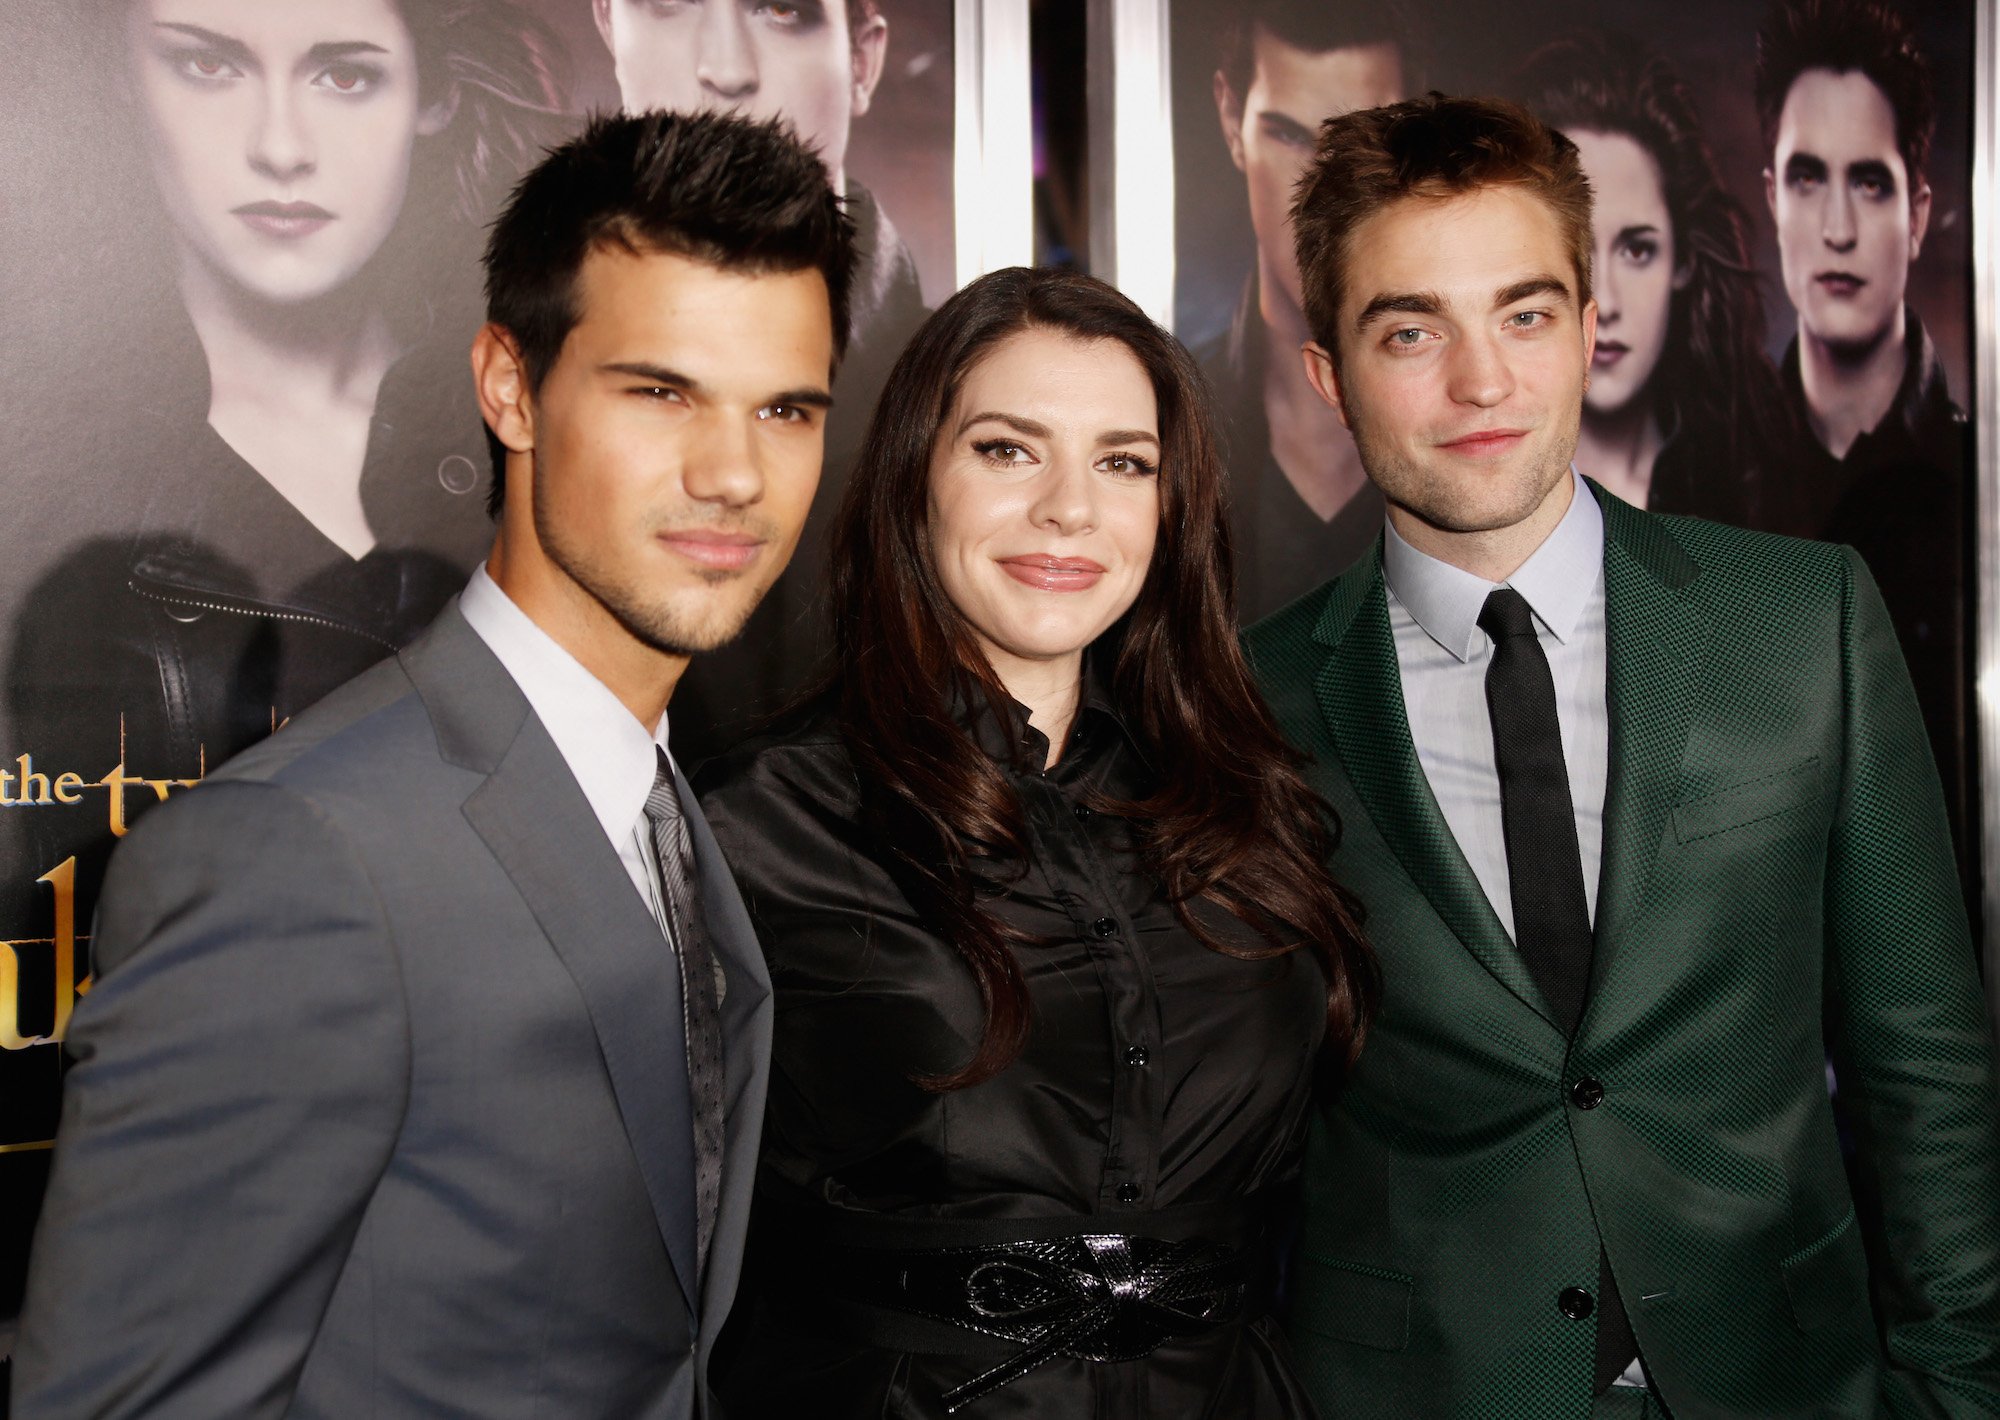 Taylor Lautner, Stephenie Meyer, and Robert Pattinson at 'The Twilight Saga: Breaking Dawn - Part 2' Los Angeles premiere on November 12, 2012.